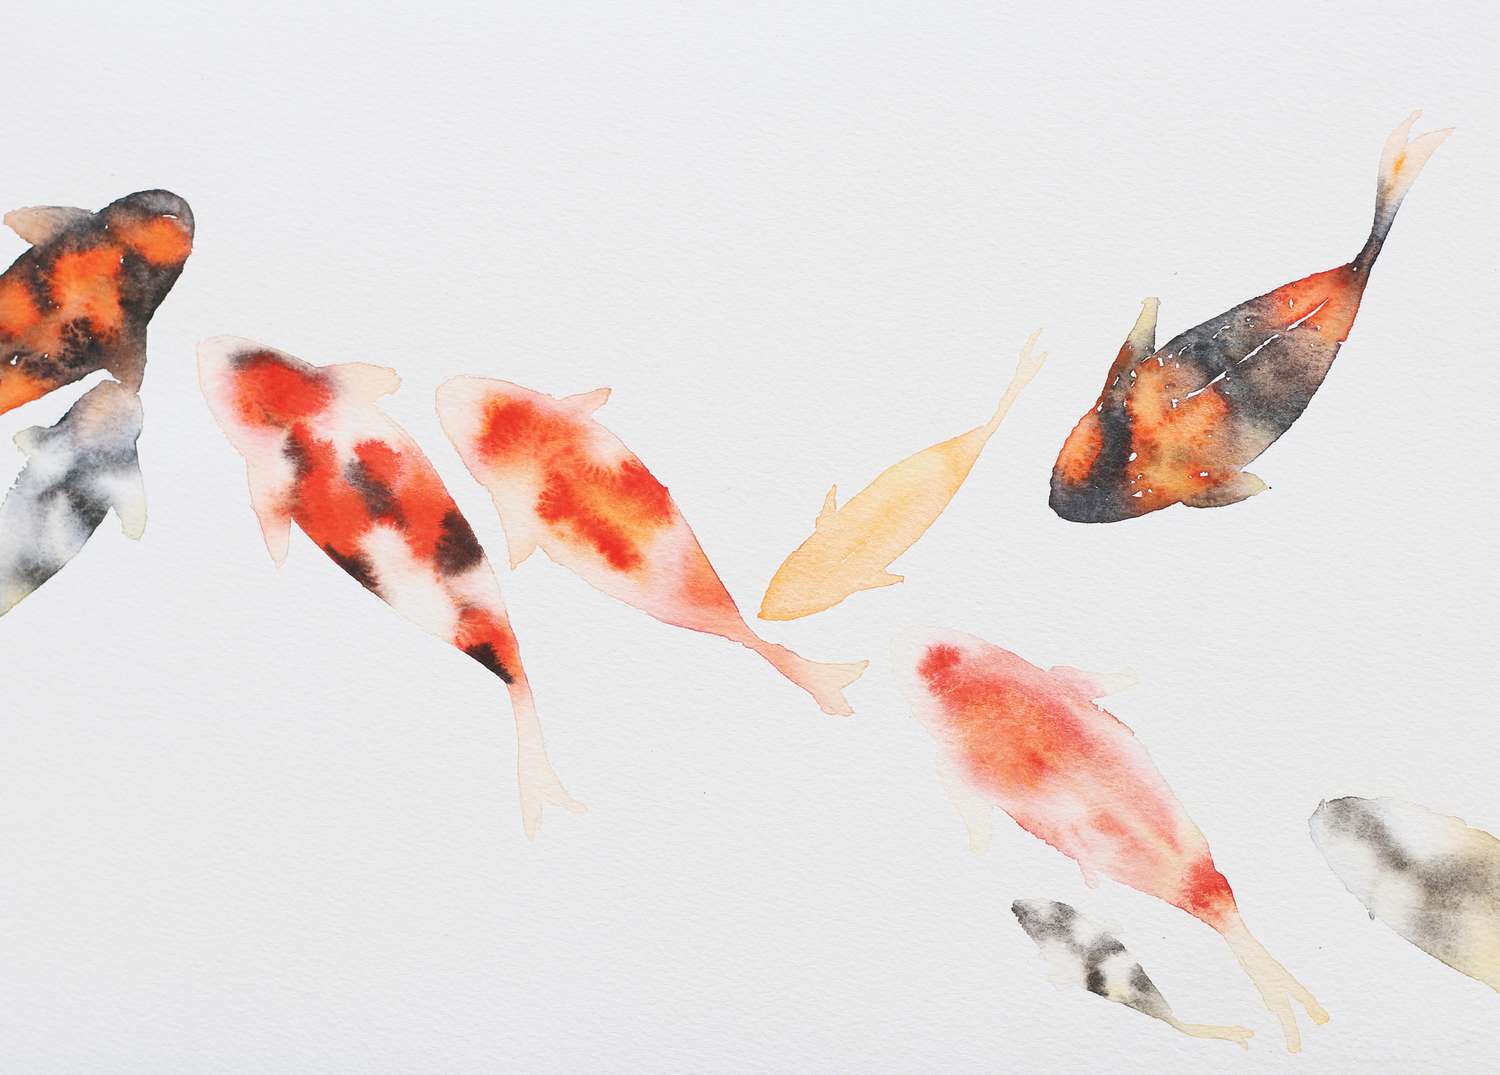 Pintura de peixe com aquarela em papel branco